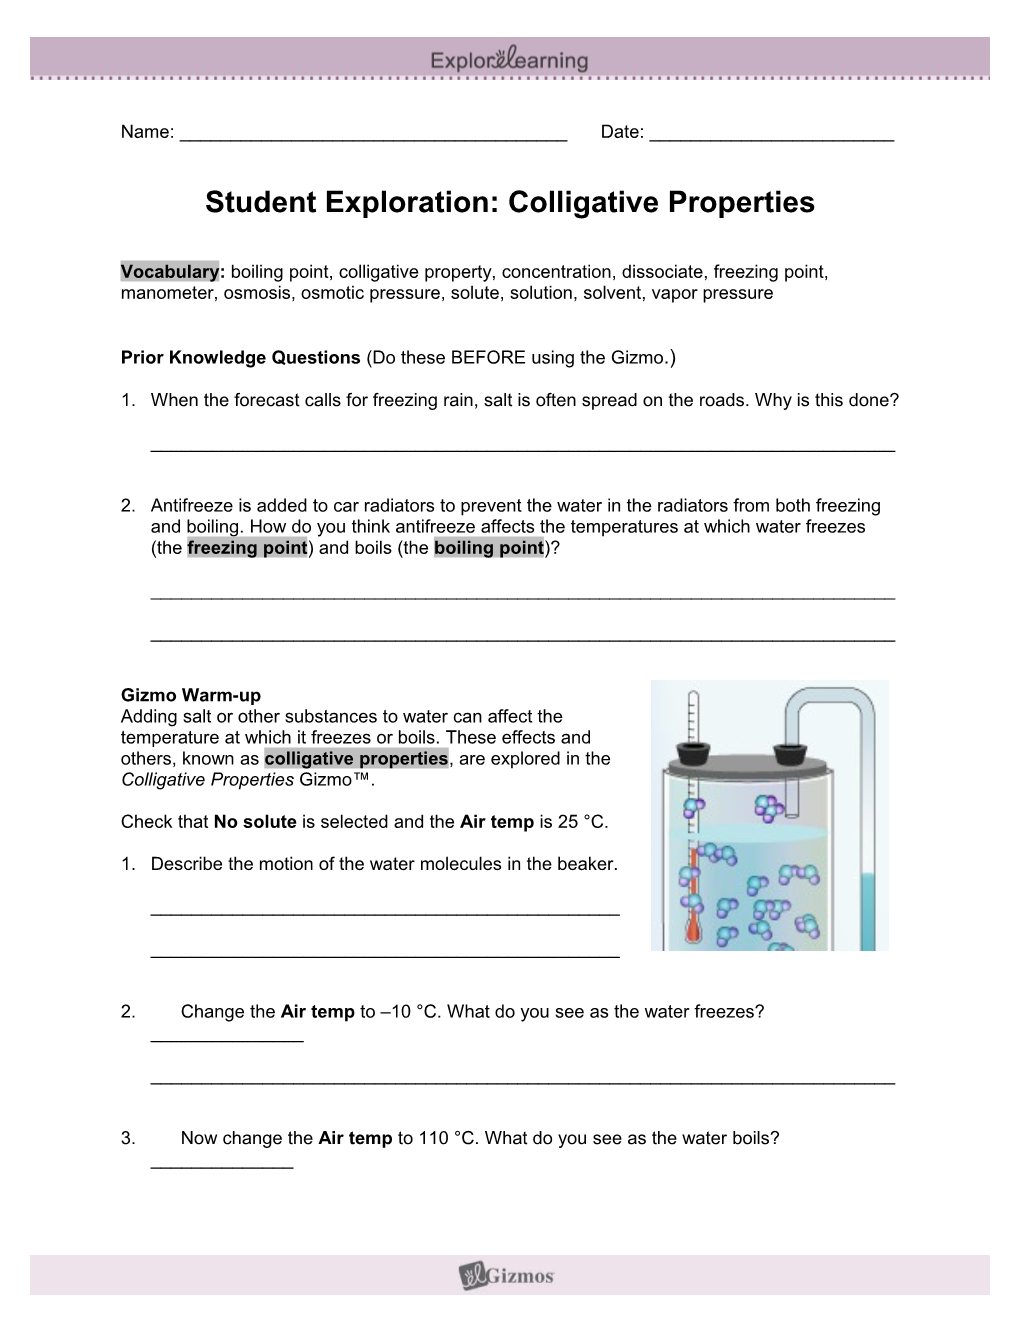 Student Exploration: Colligative Properties s1